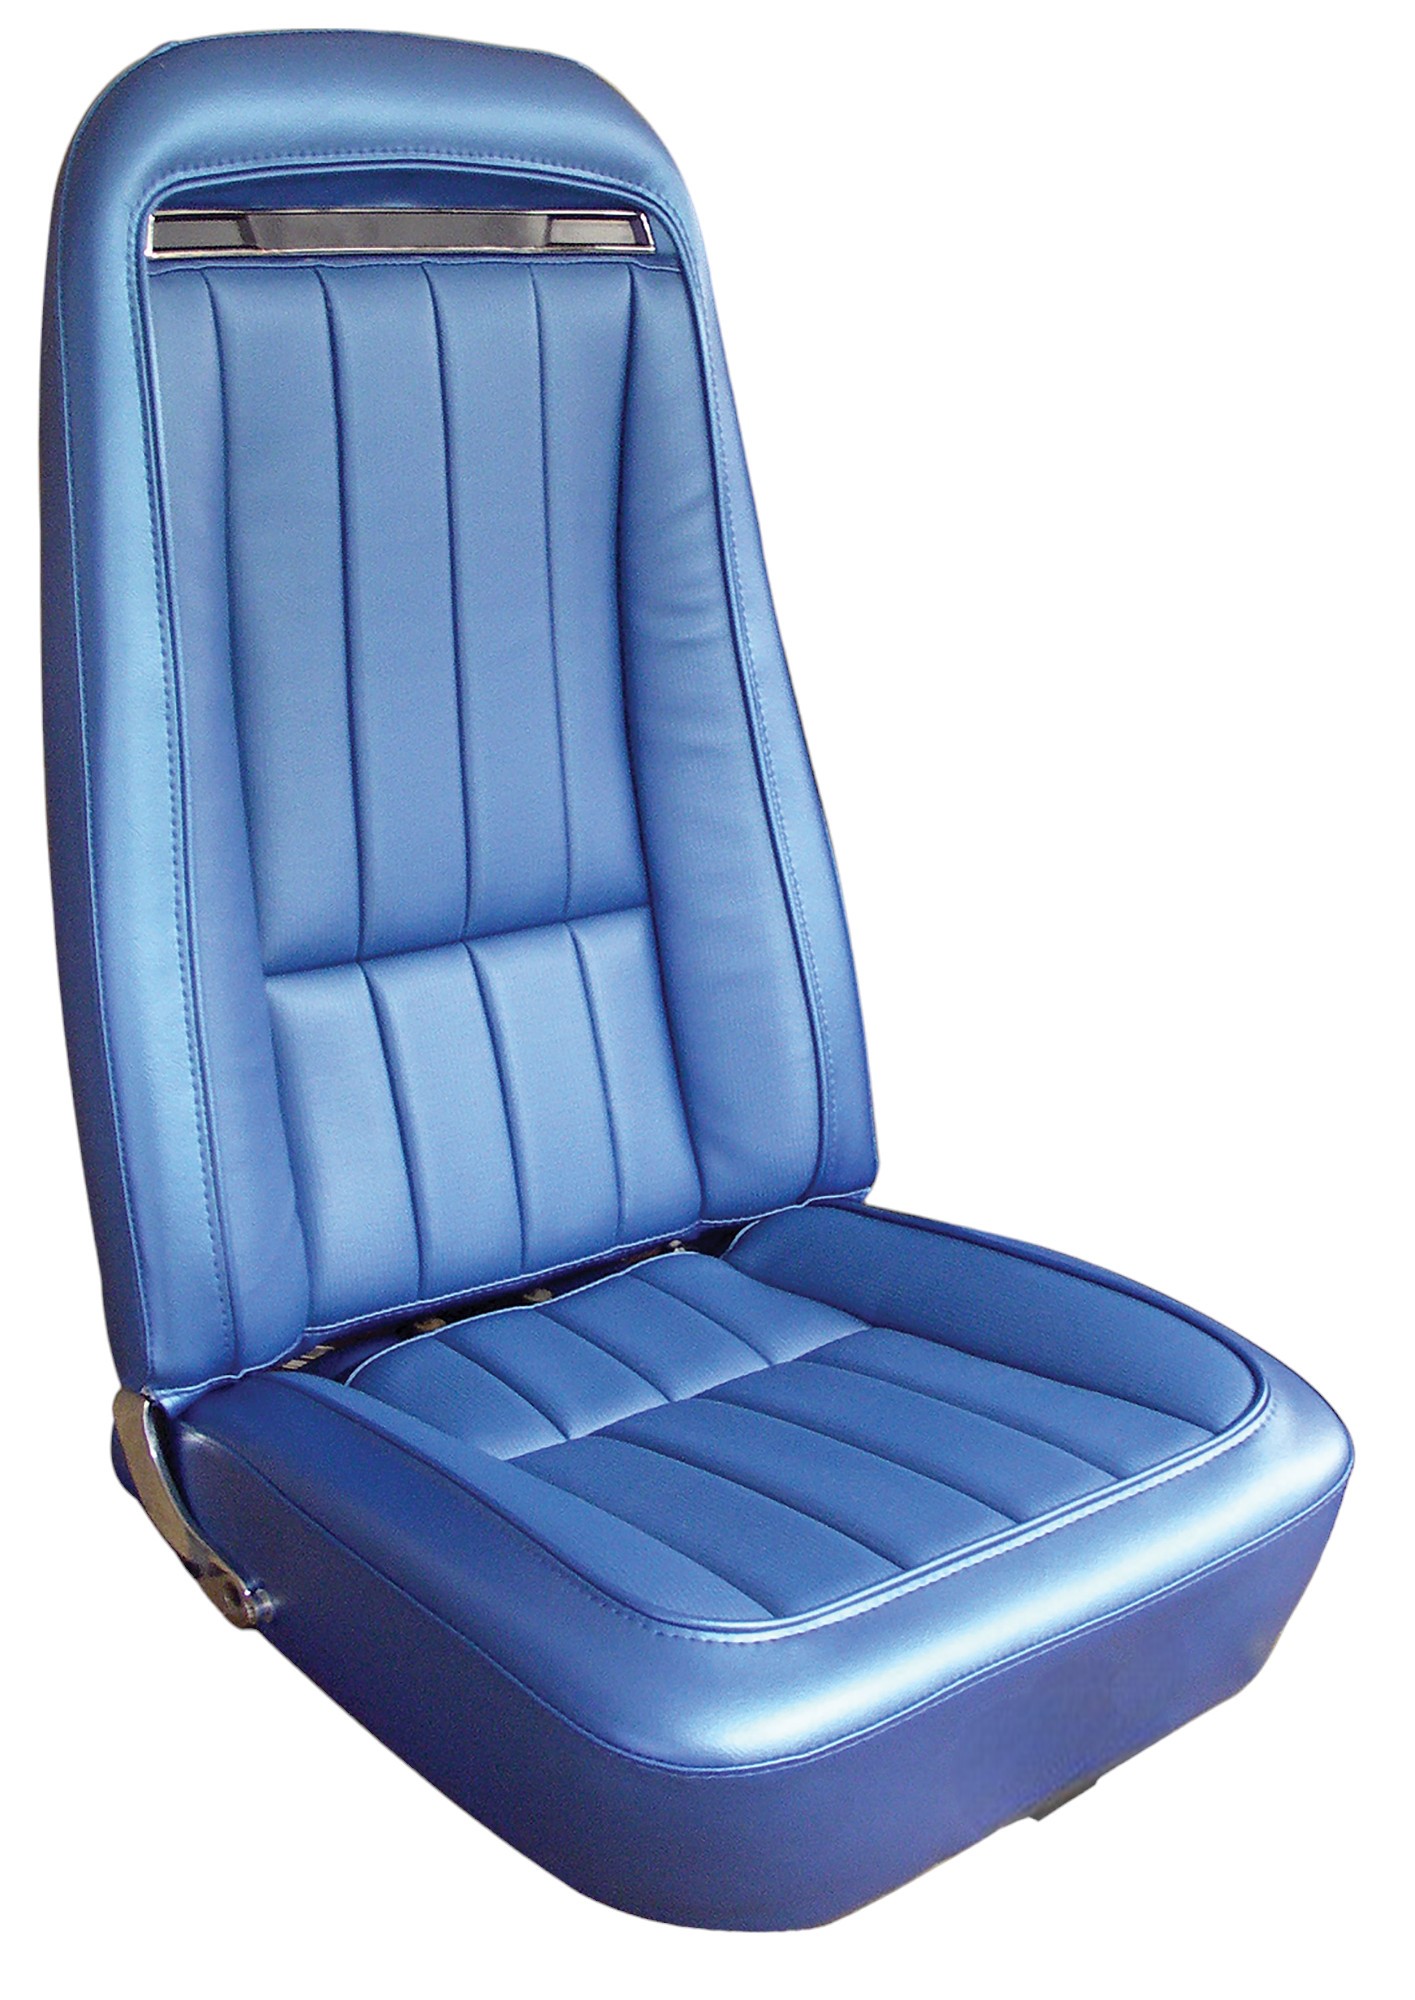 1970 C3 Corvette Mounted Seats Bright Blue Vinyl Without Shoulder Harness